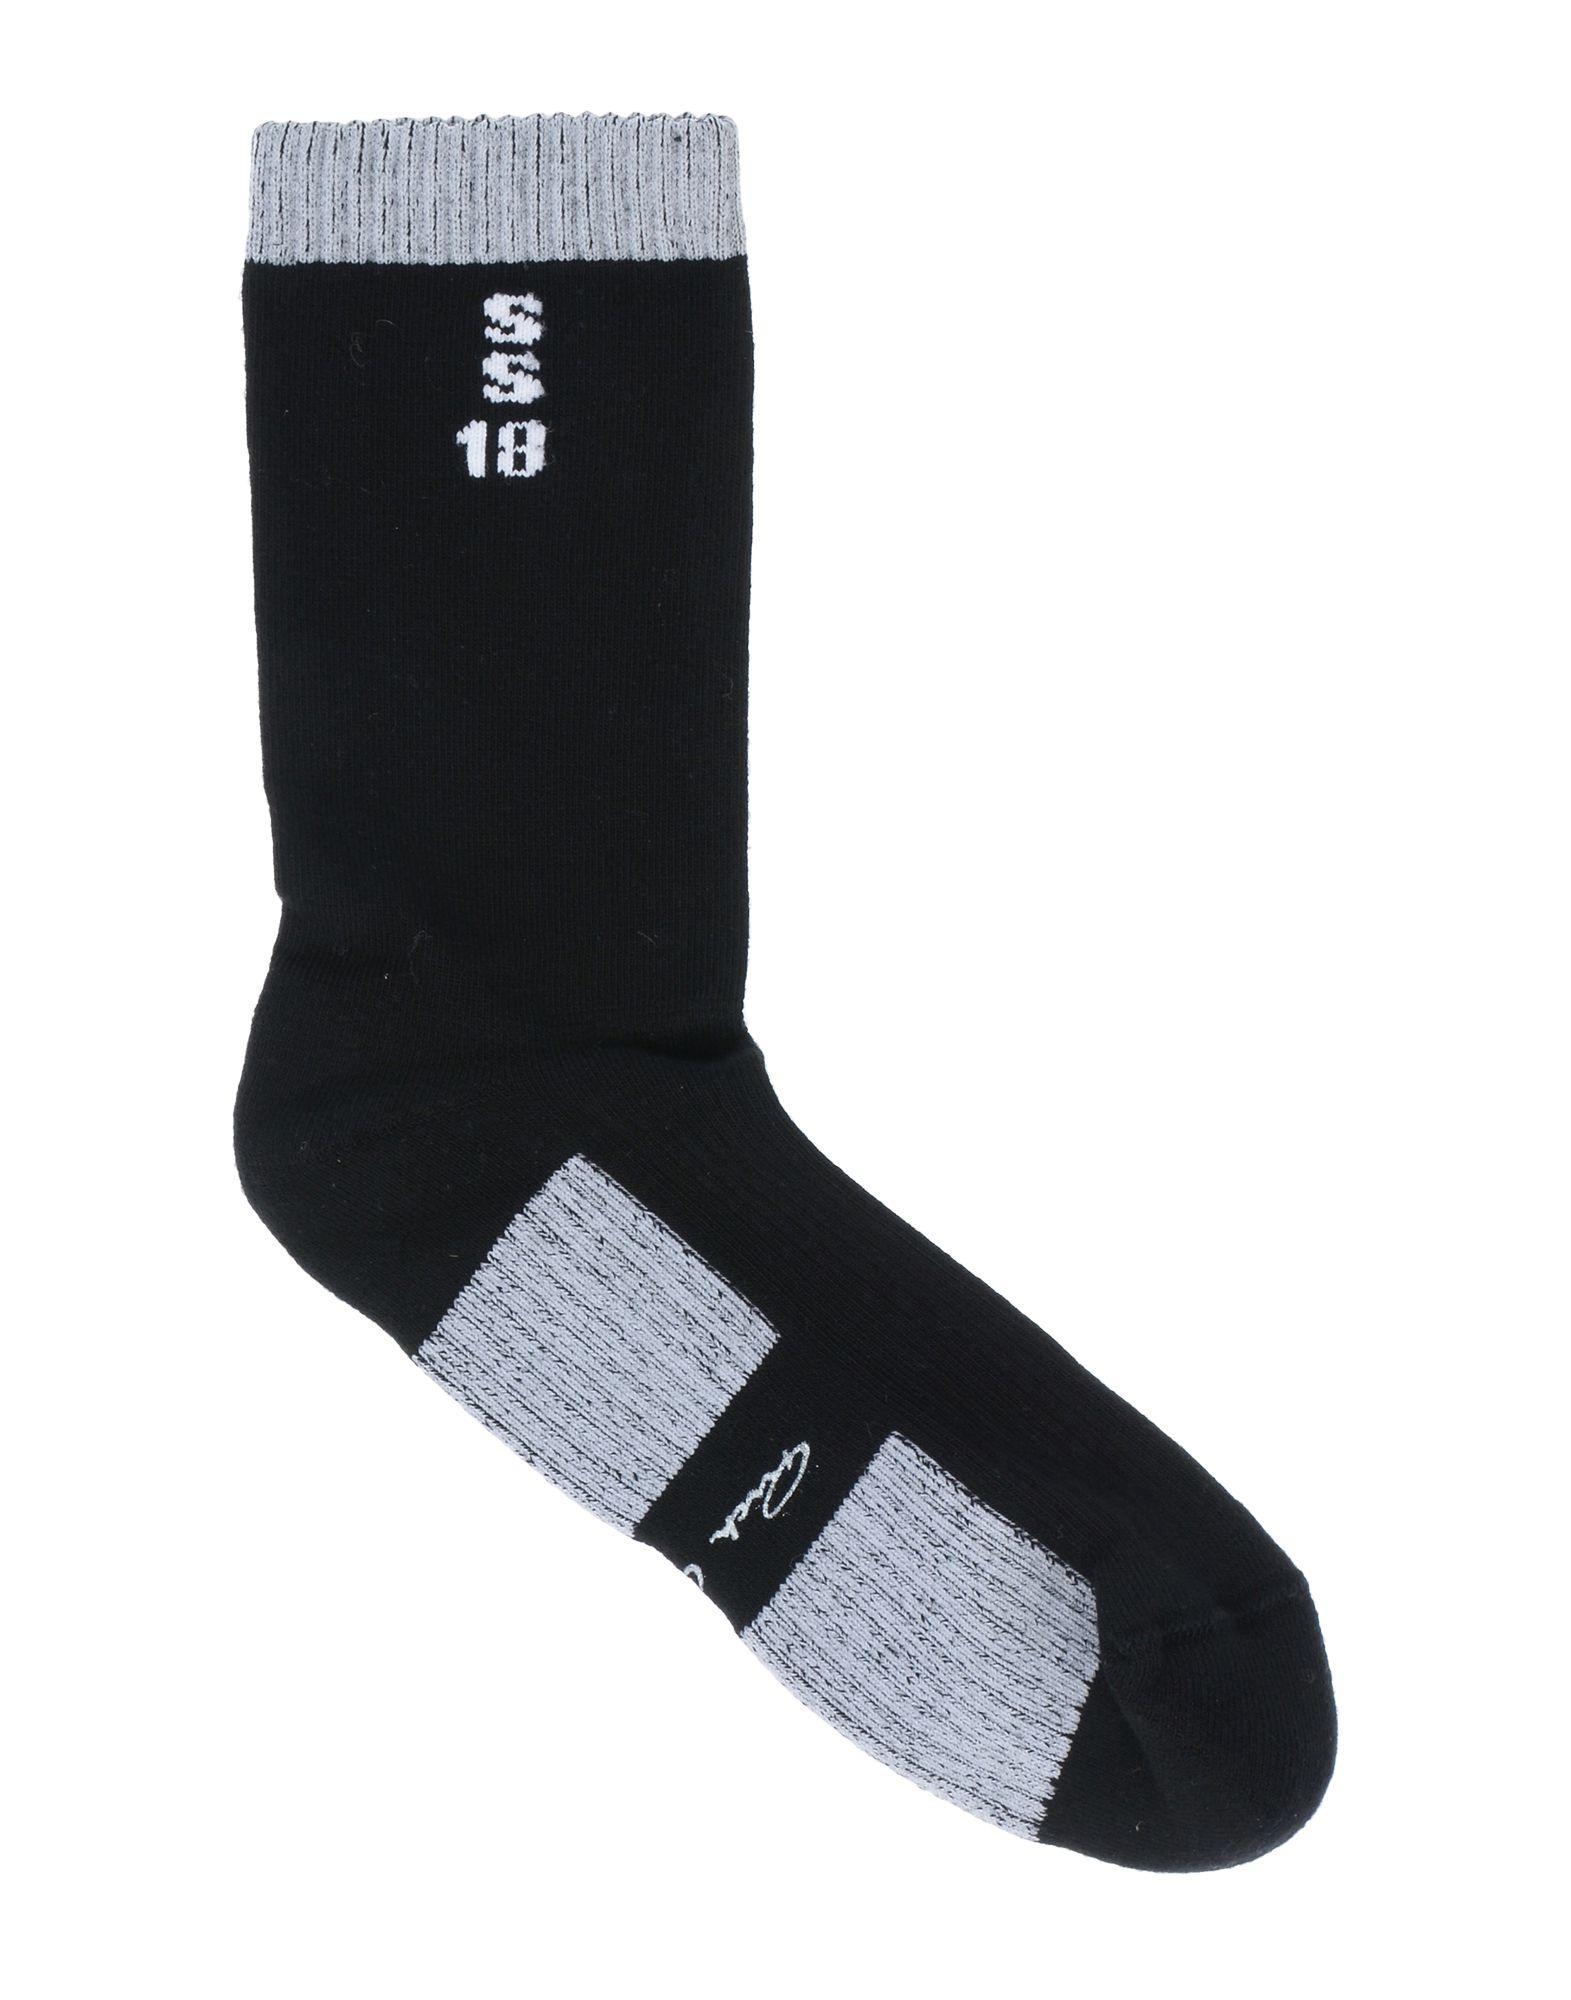 Rick Owens Short Socks in Black for Men - Lyst